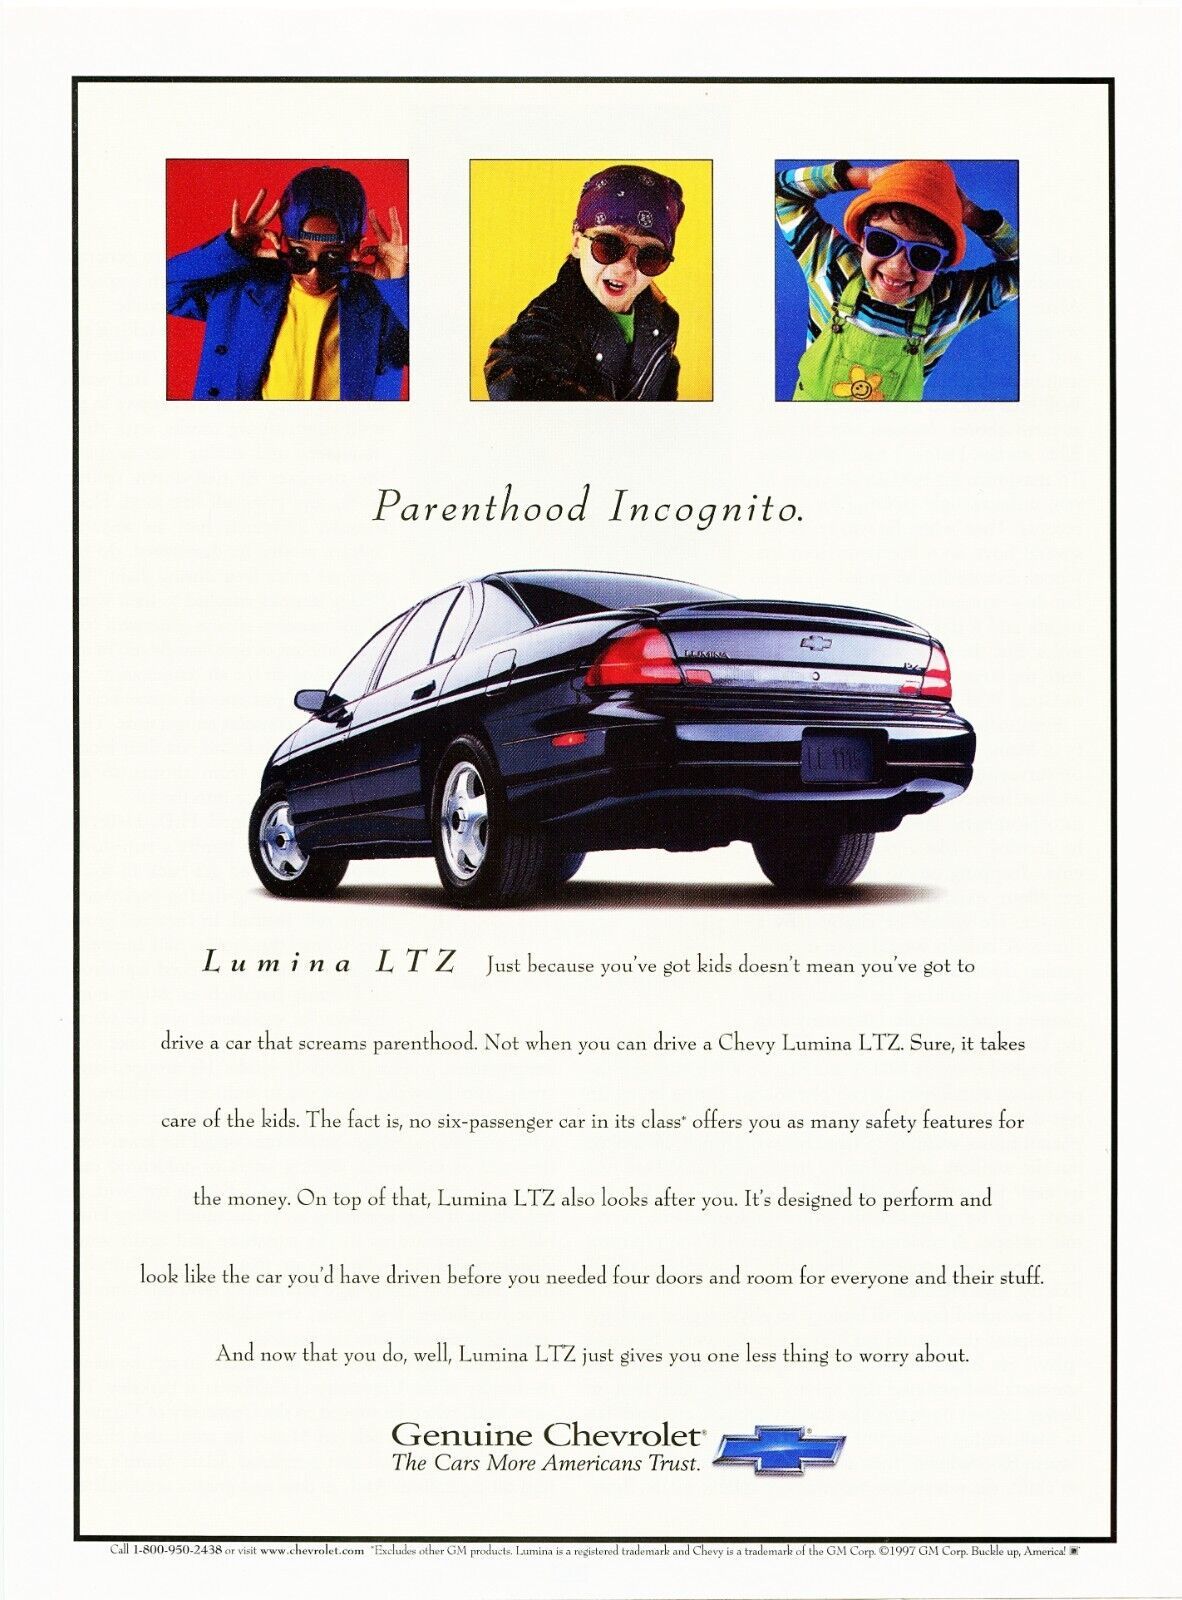 Chevy Lumina LTZ Parenthood Incognito Vintage 1997 Full-Page Print Magazine Ad - $9.70